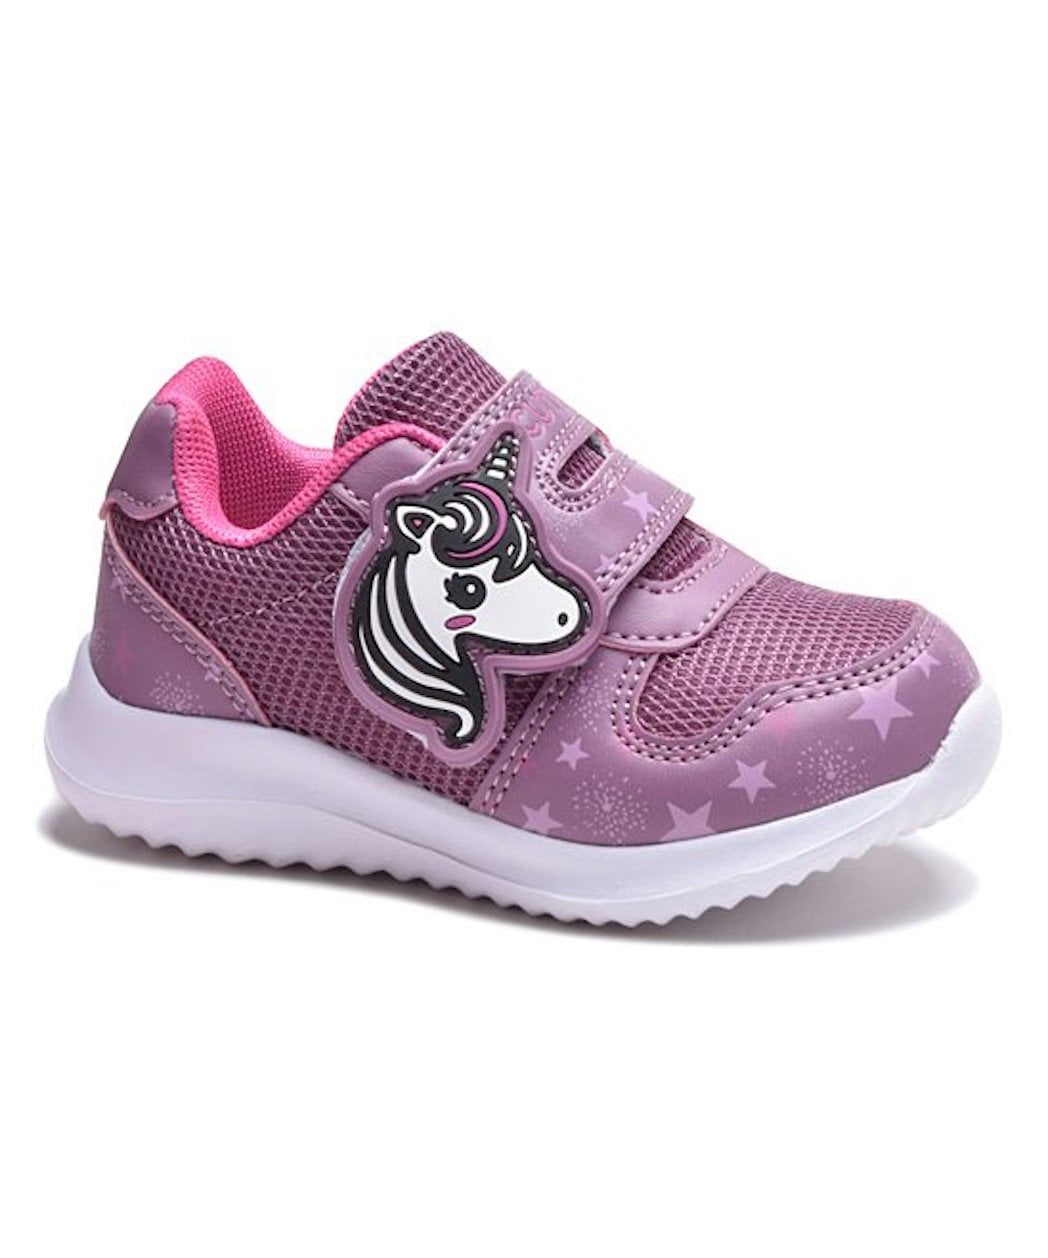 Girls' Toddler Sneaker Kids Shoes Tennis Shoe, Unicorn, Size 5-10 ...